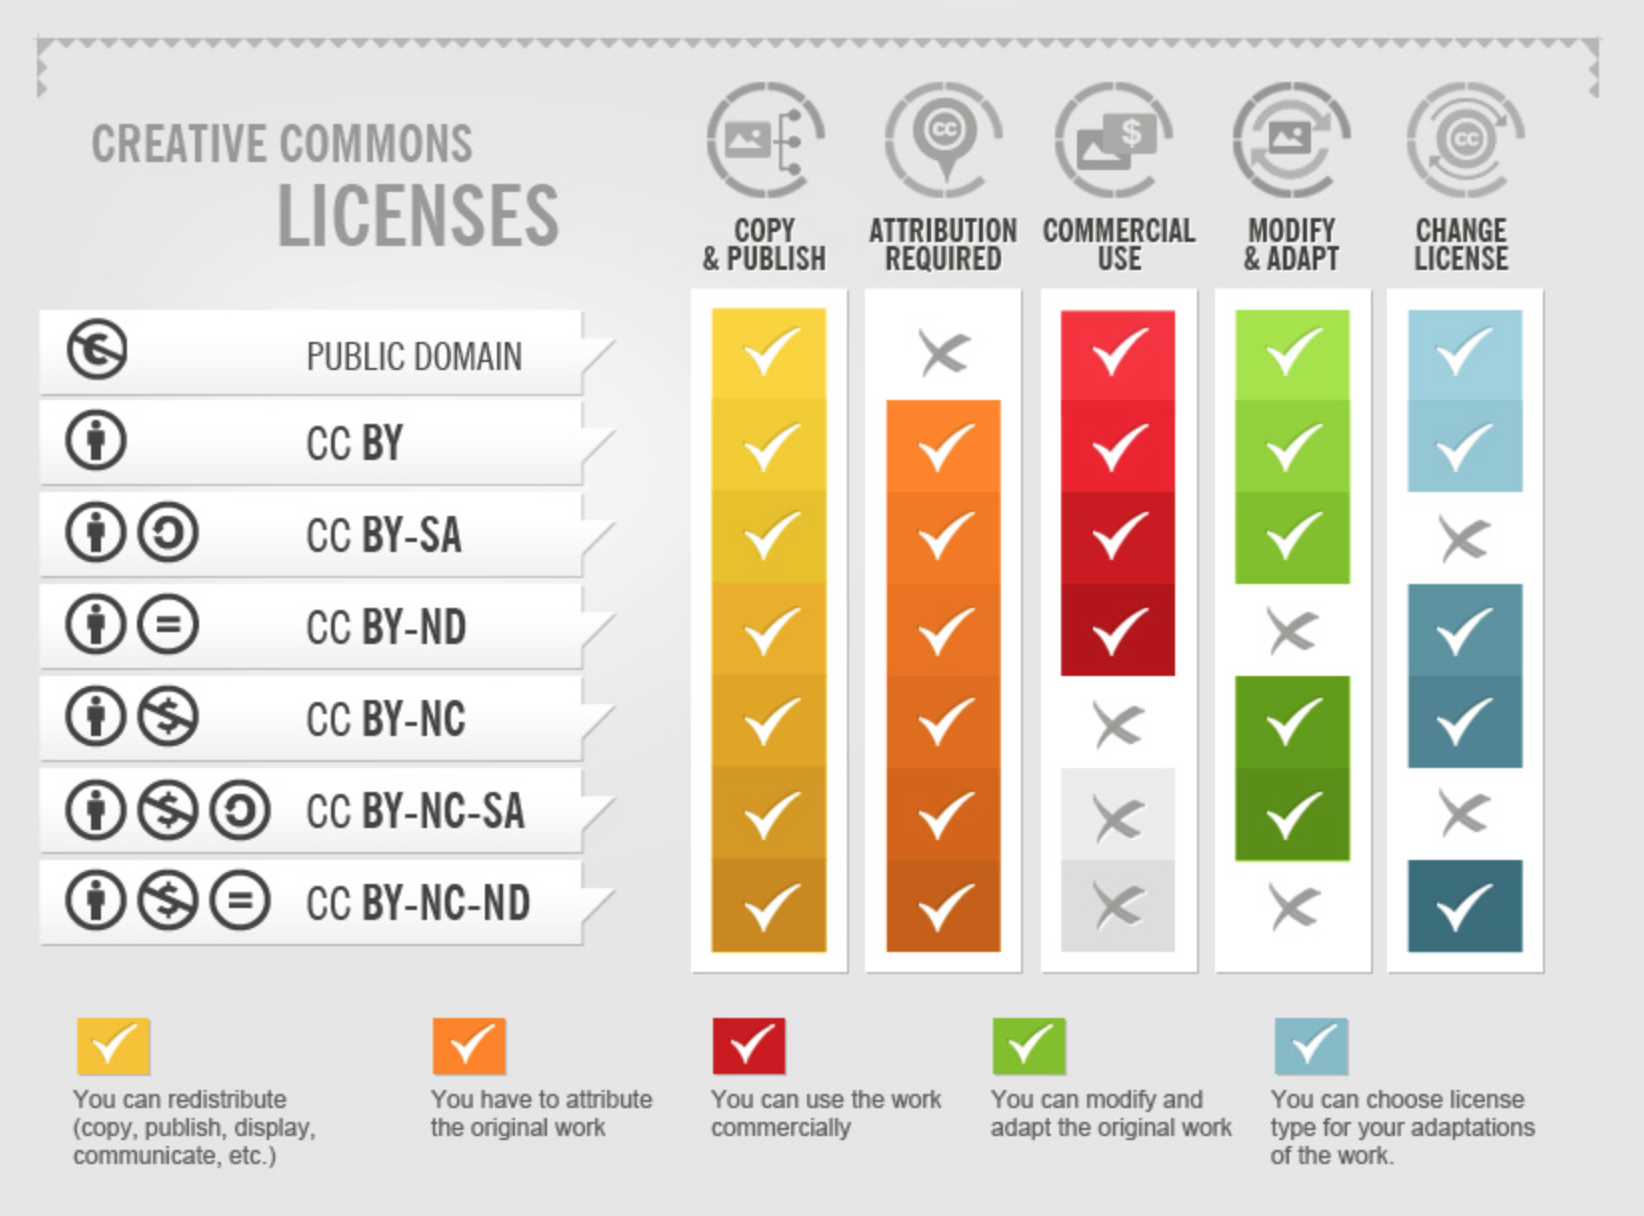 cc_licenses.png